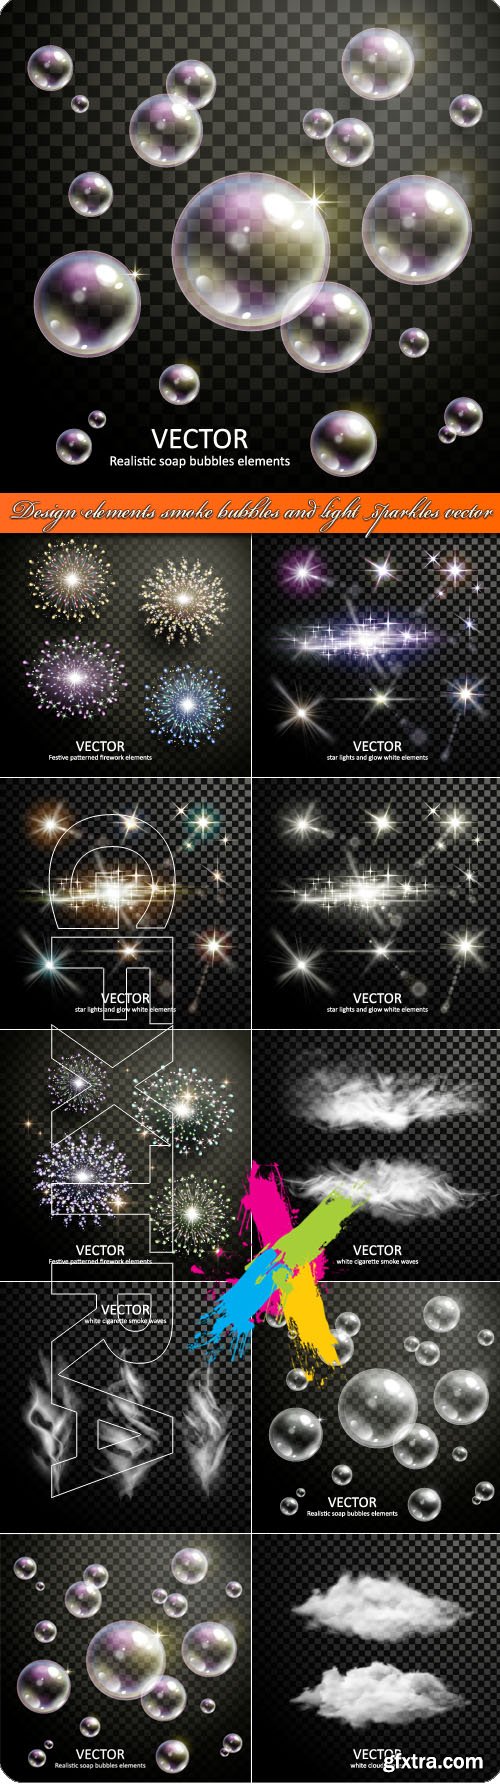 Design elements smoke bubbles and light sparkles vector